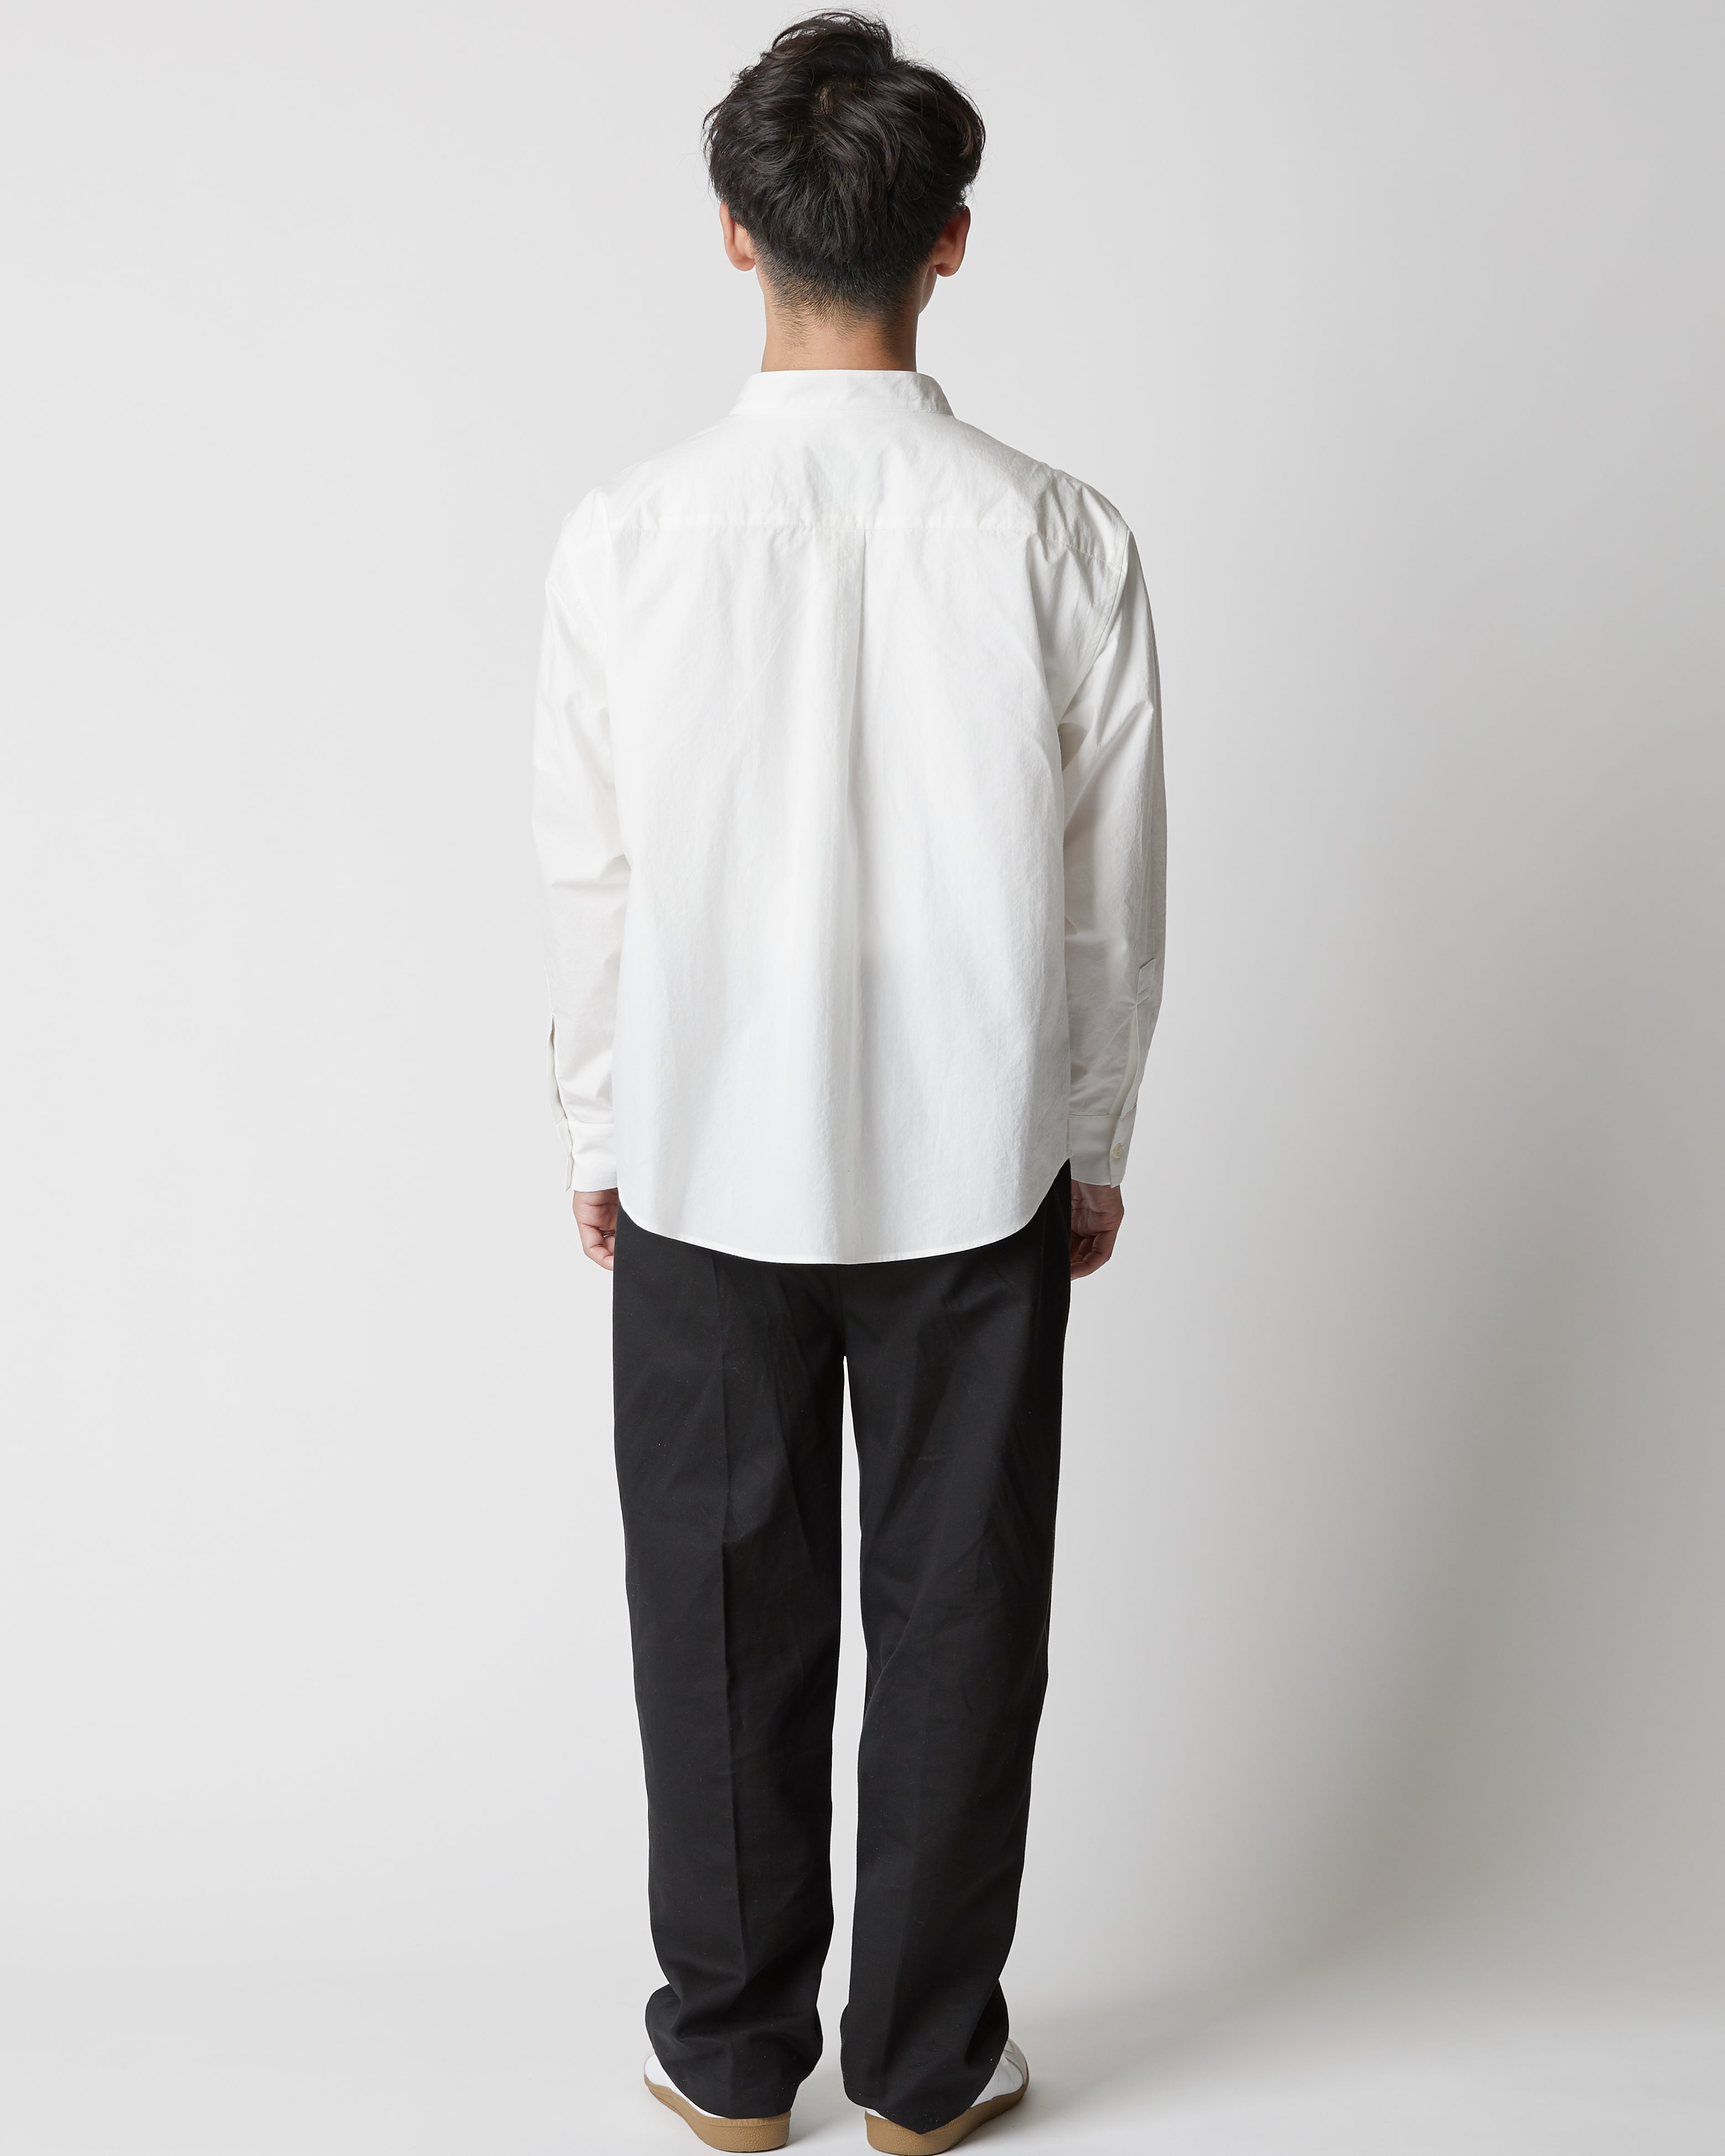 calm Stand collar Shirt（スタンドカラーシャツ） – calm160ー160cm